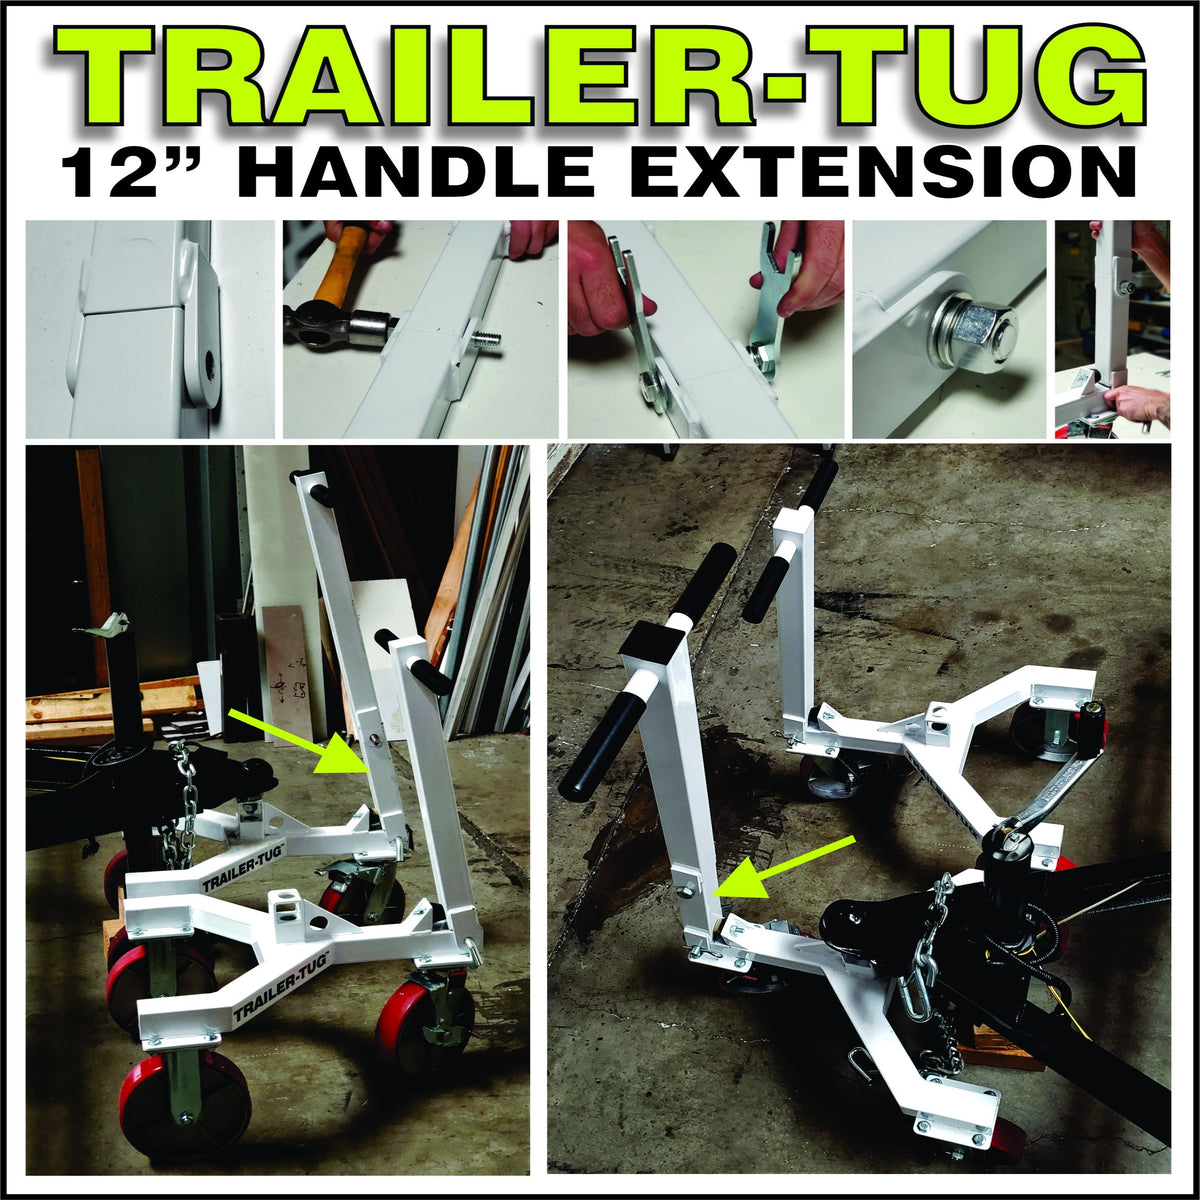 Trailer-Tug 12" Handle Extension